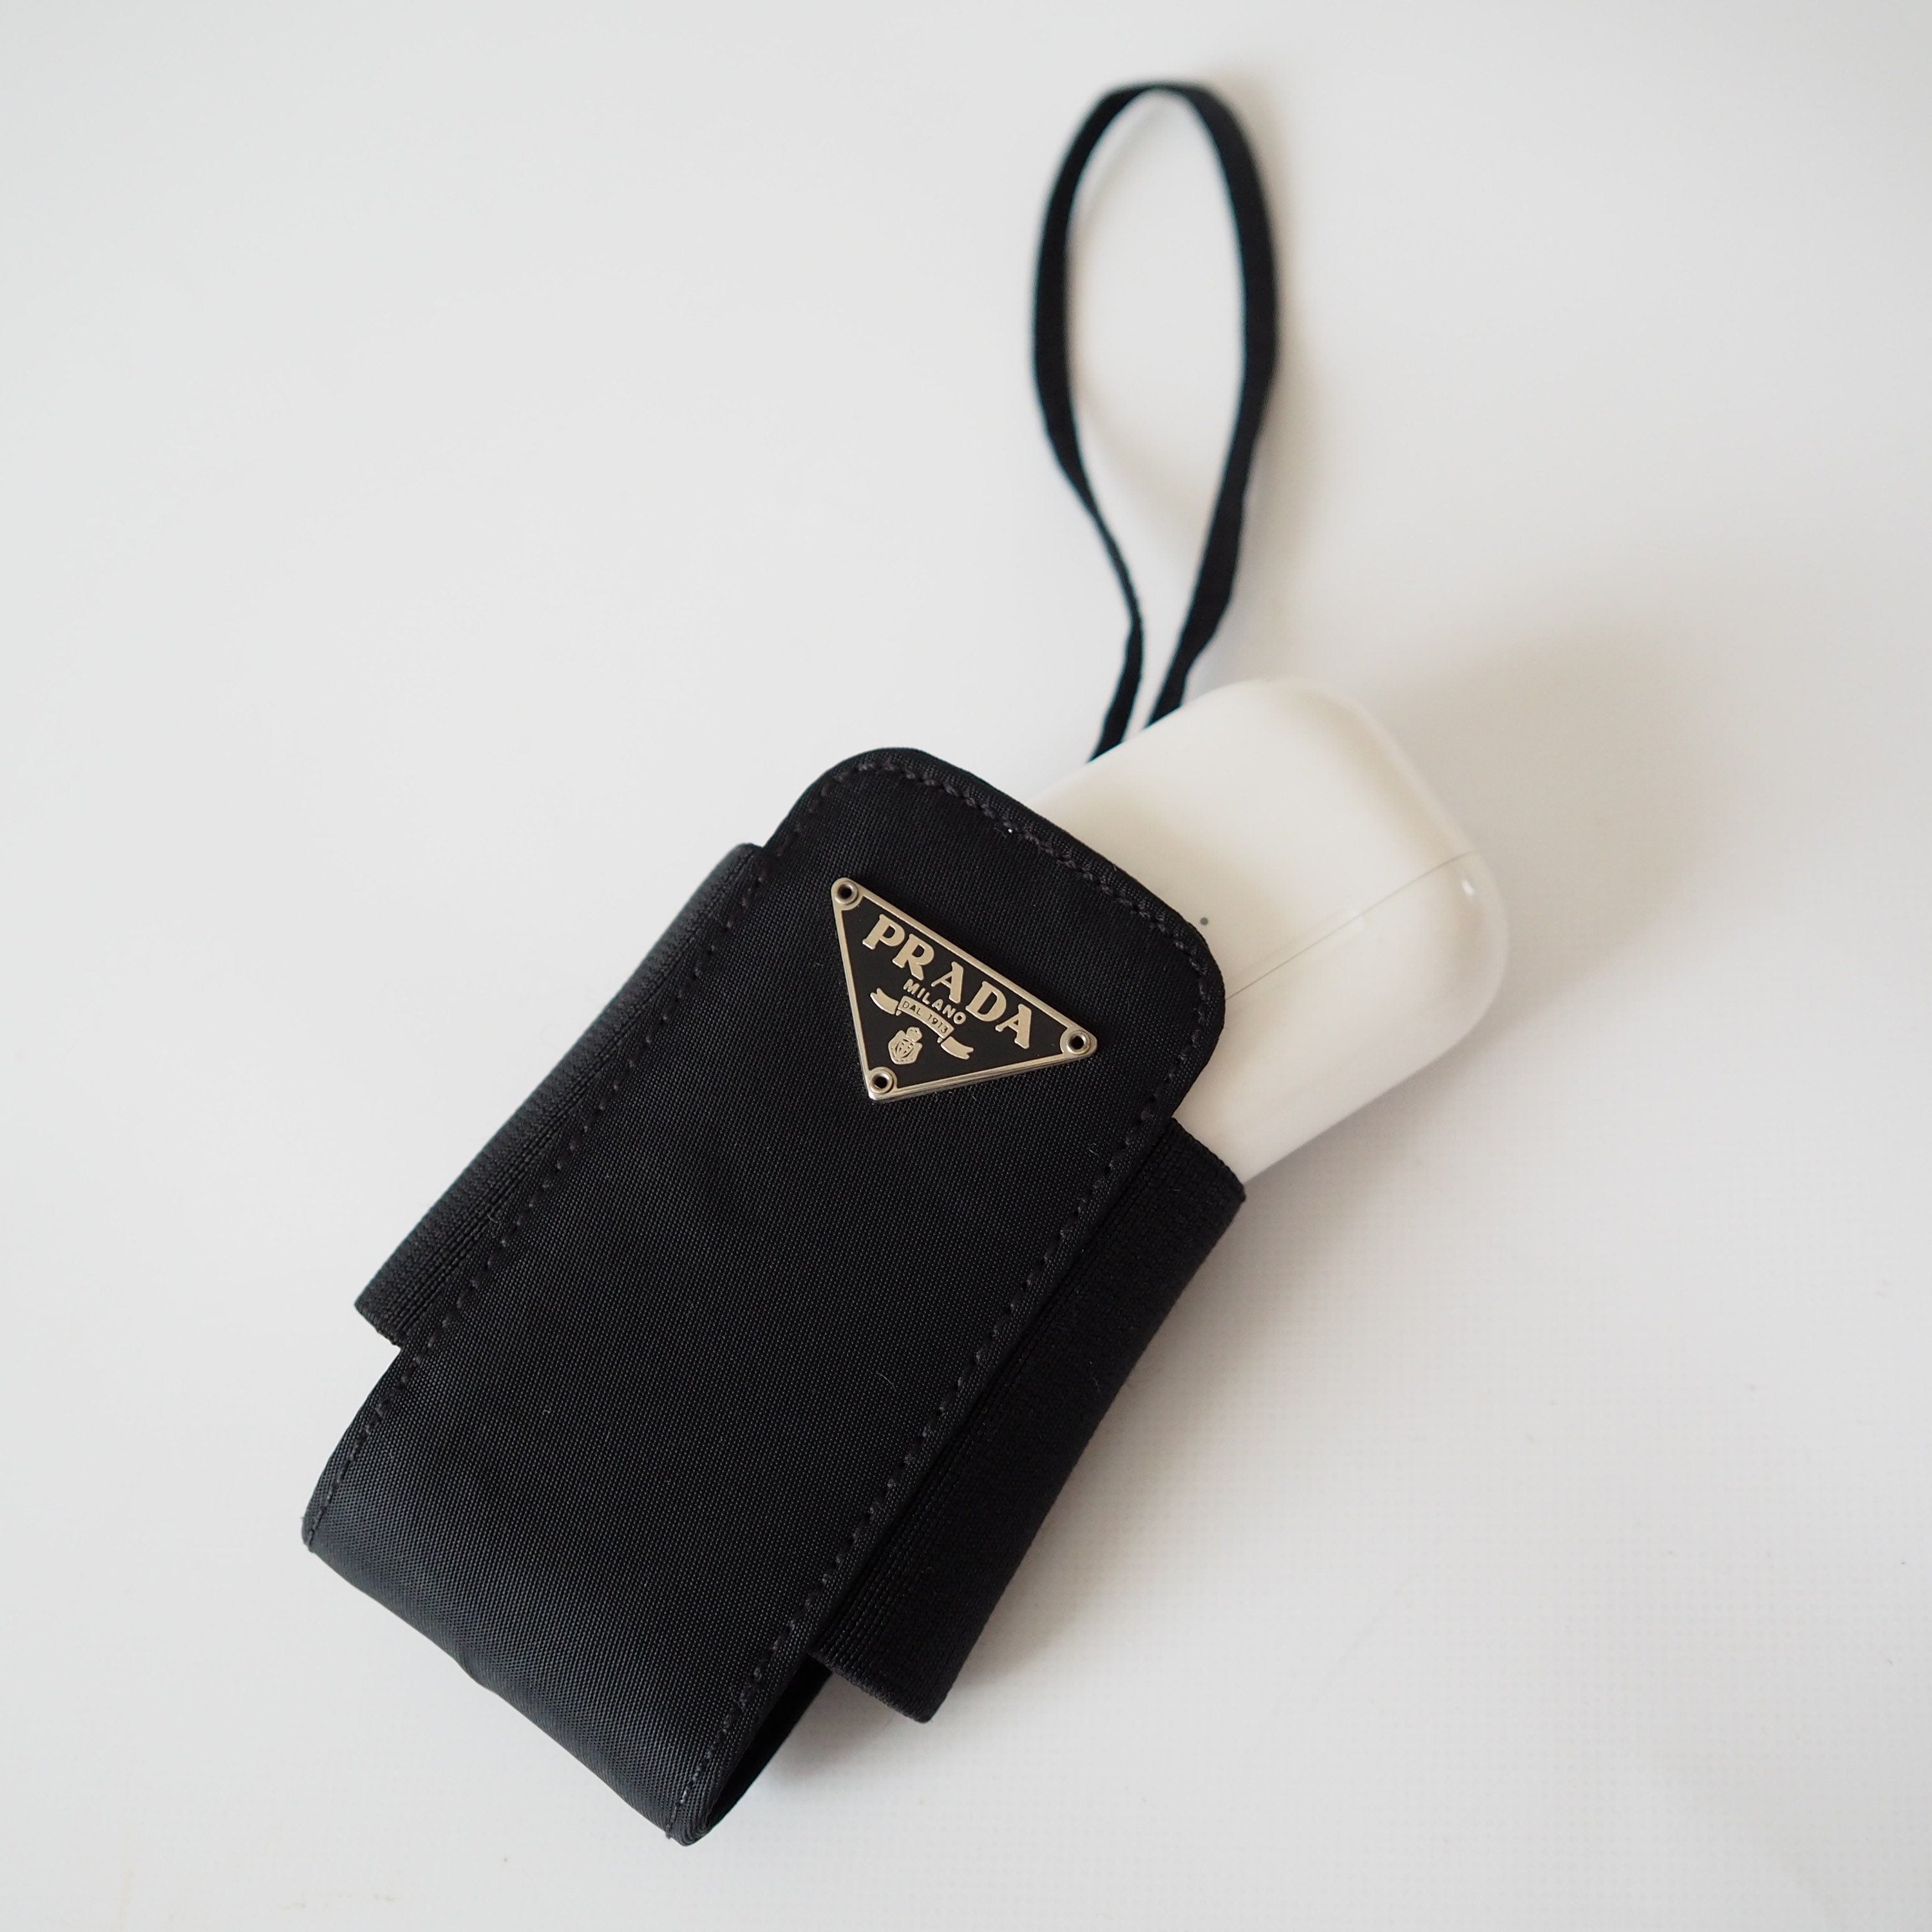 PRADA Nylon Phone IQOS Airpots Case Pouch Black Logo Purse Authentic